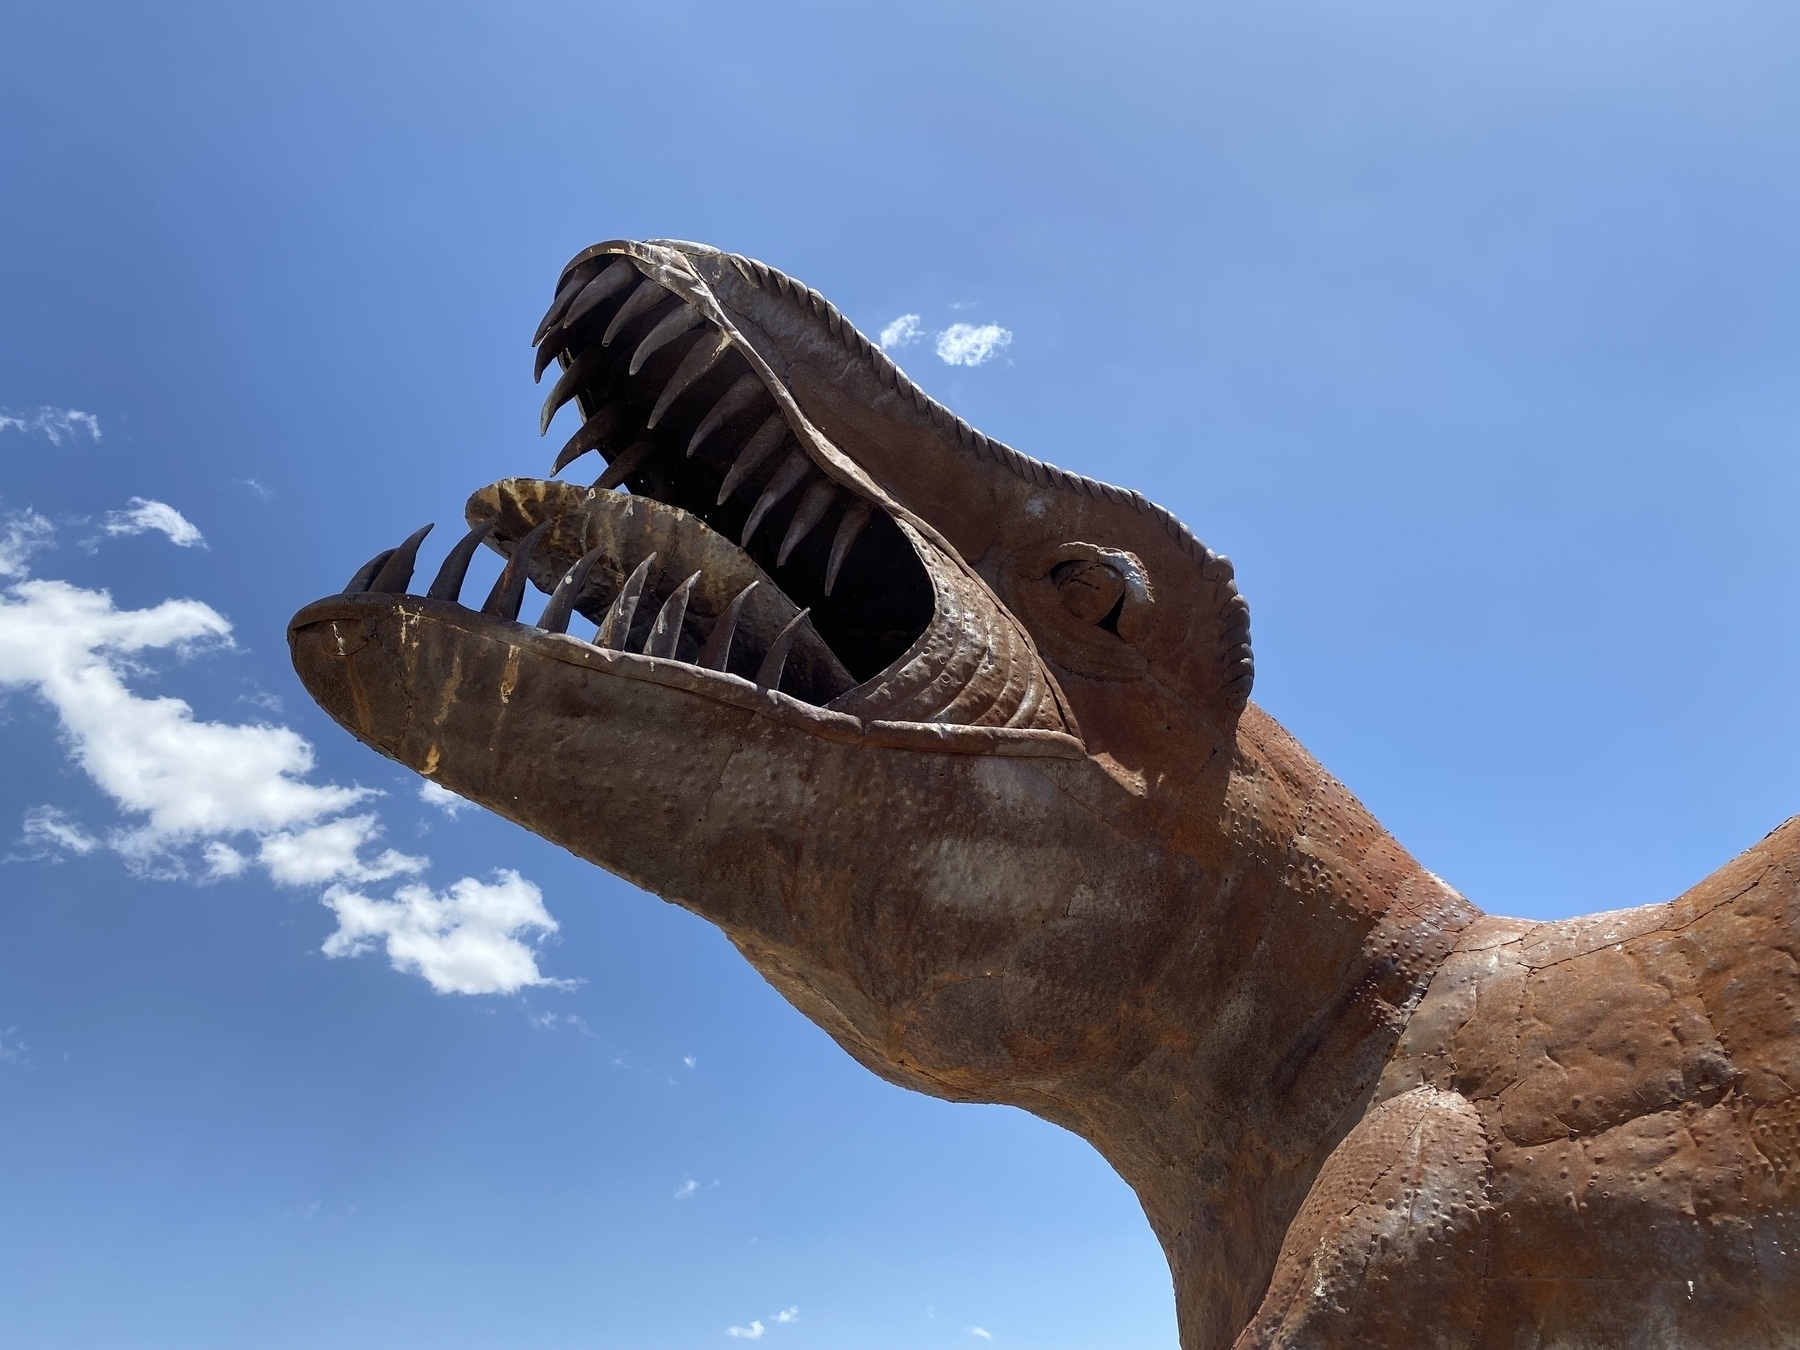 Head of a metal dinosaur sculpture with many long, sharp teeth against a blue sky.